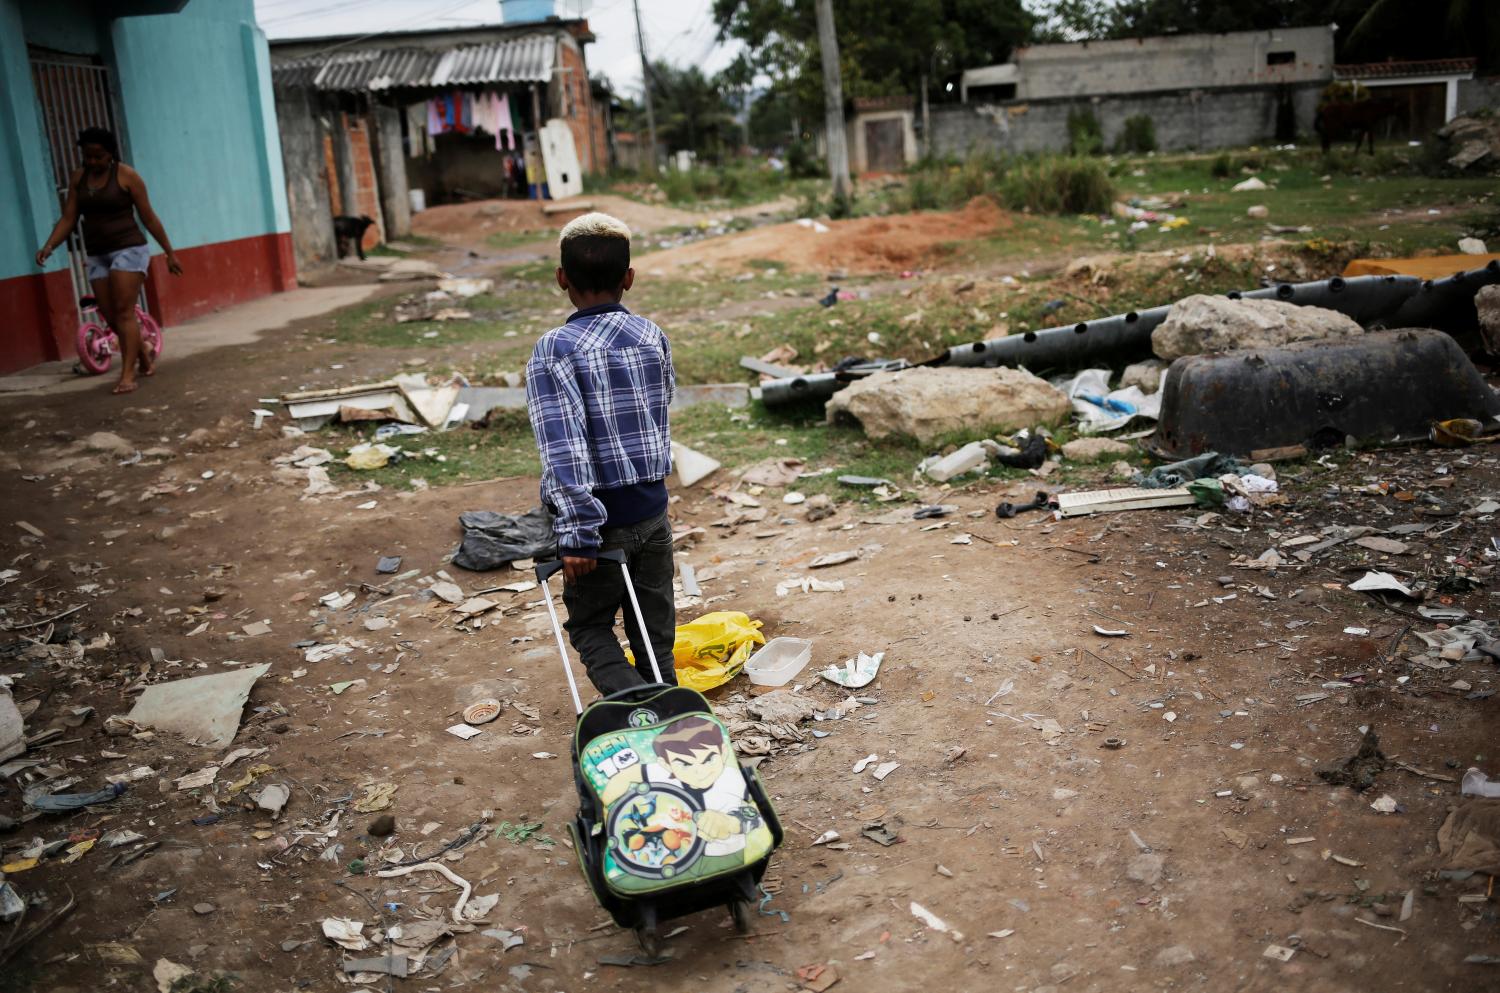 A boy pulls his school bag at a favela, or a slum, in Rio de Janeiro